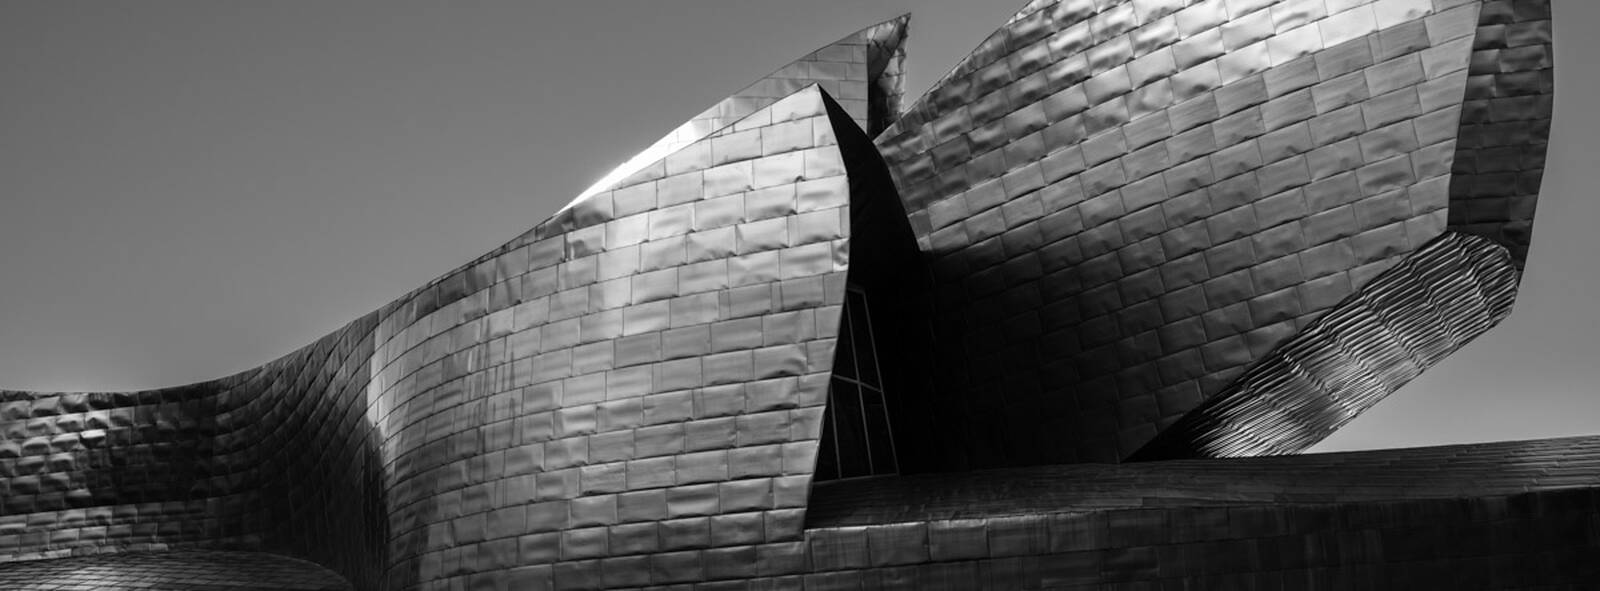 Image of Guggenheim Museum Bilbao by Mateusz Torbus